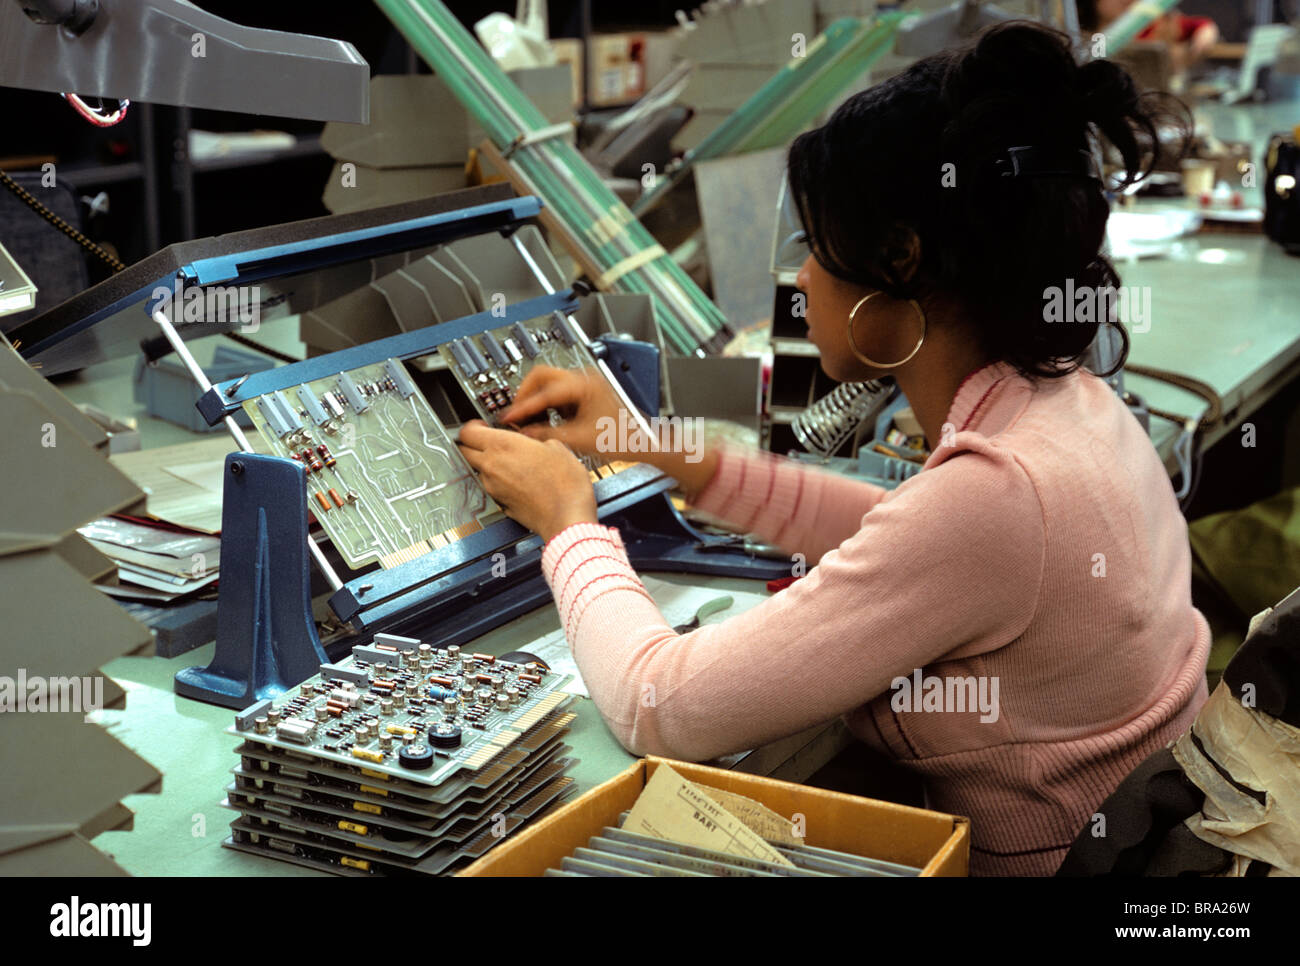 ASSEMBLING COMPUTER WOMAN WORKER Stock Photo